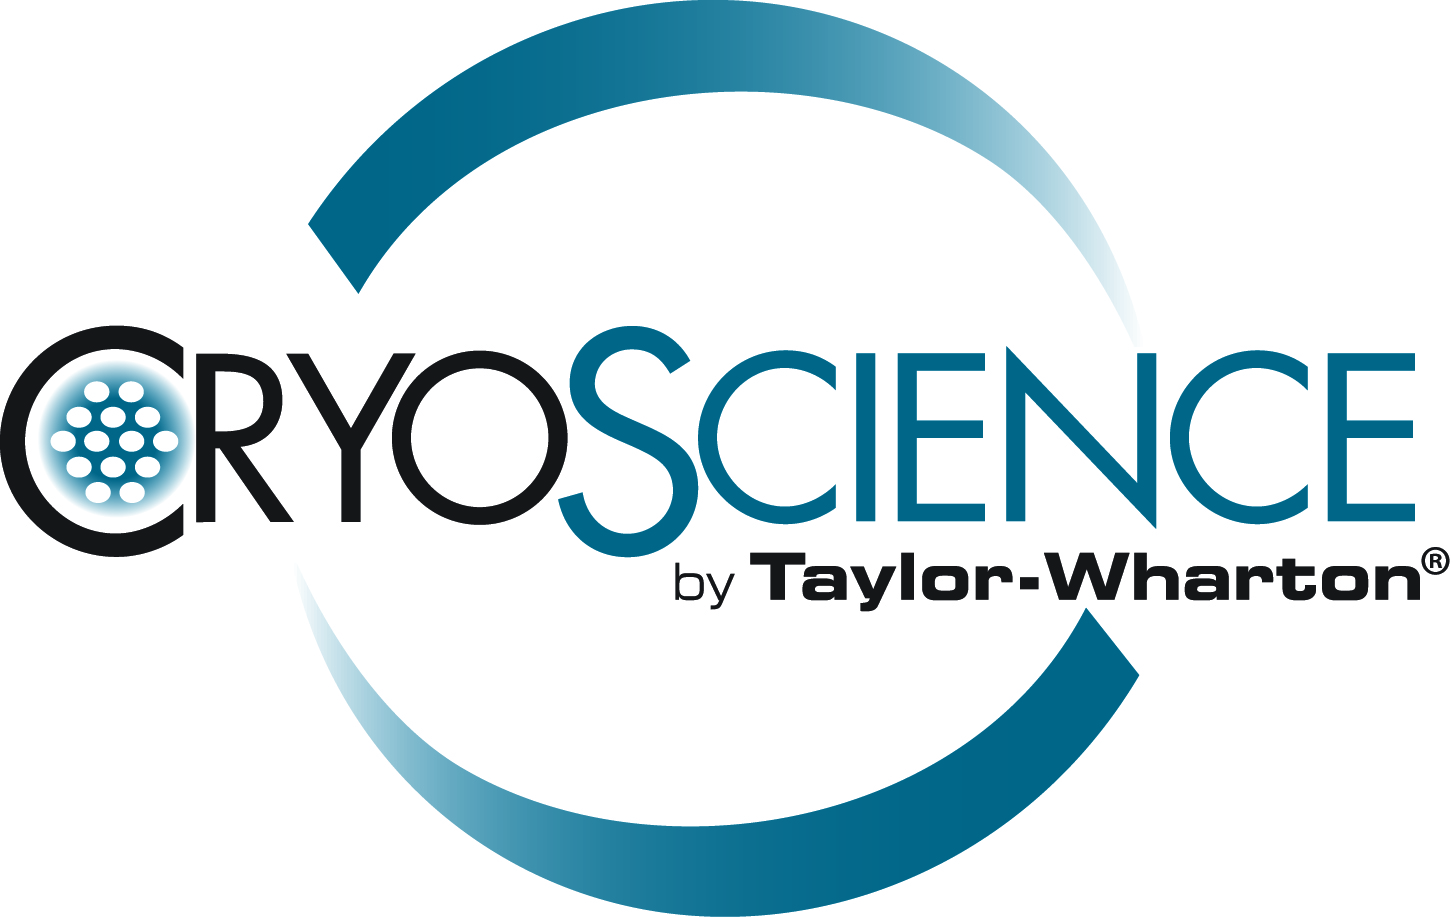 Taylor-Wharton CryoScience logo